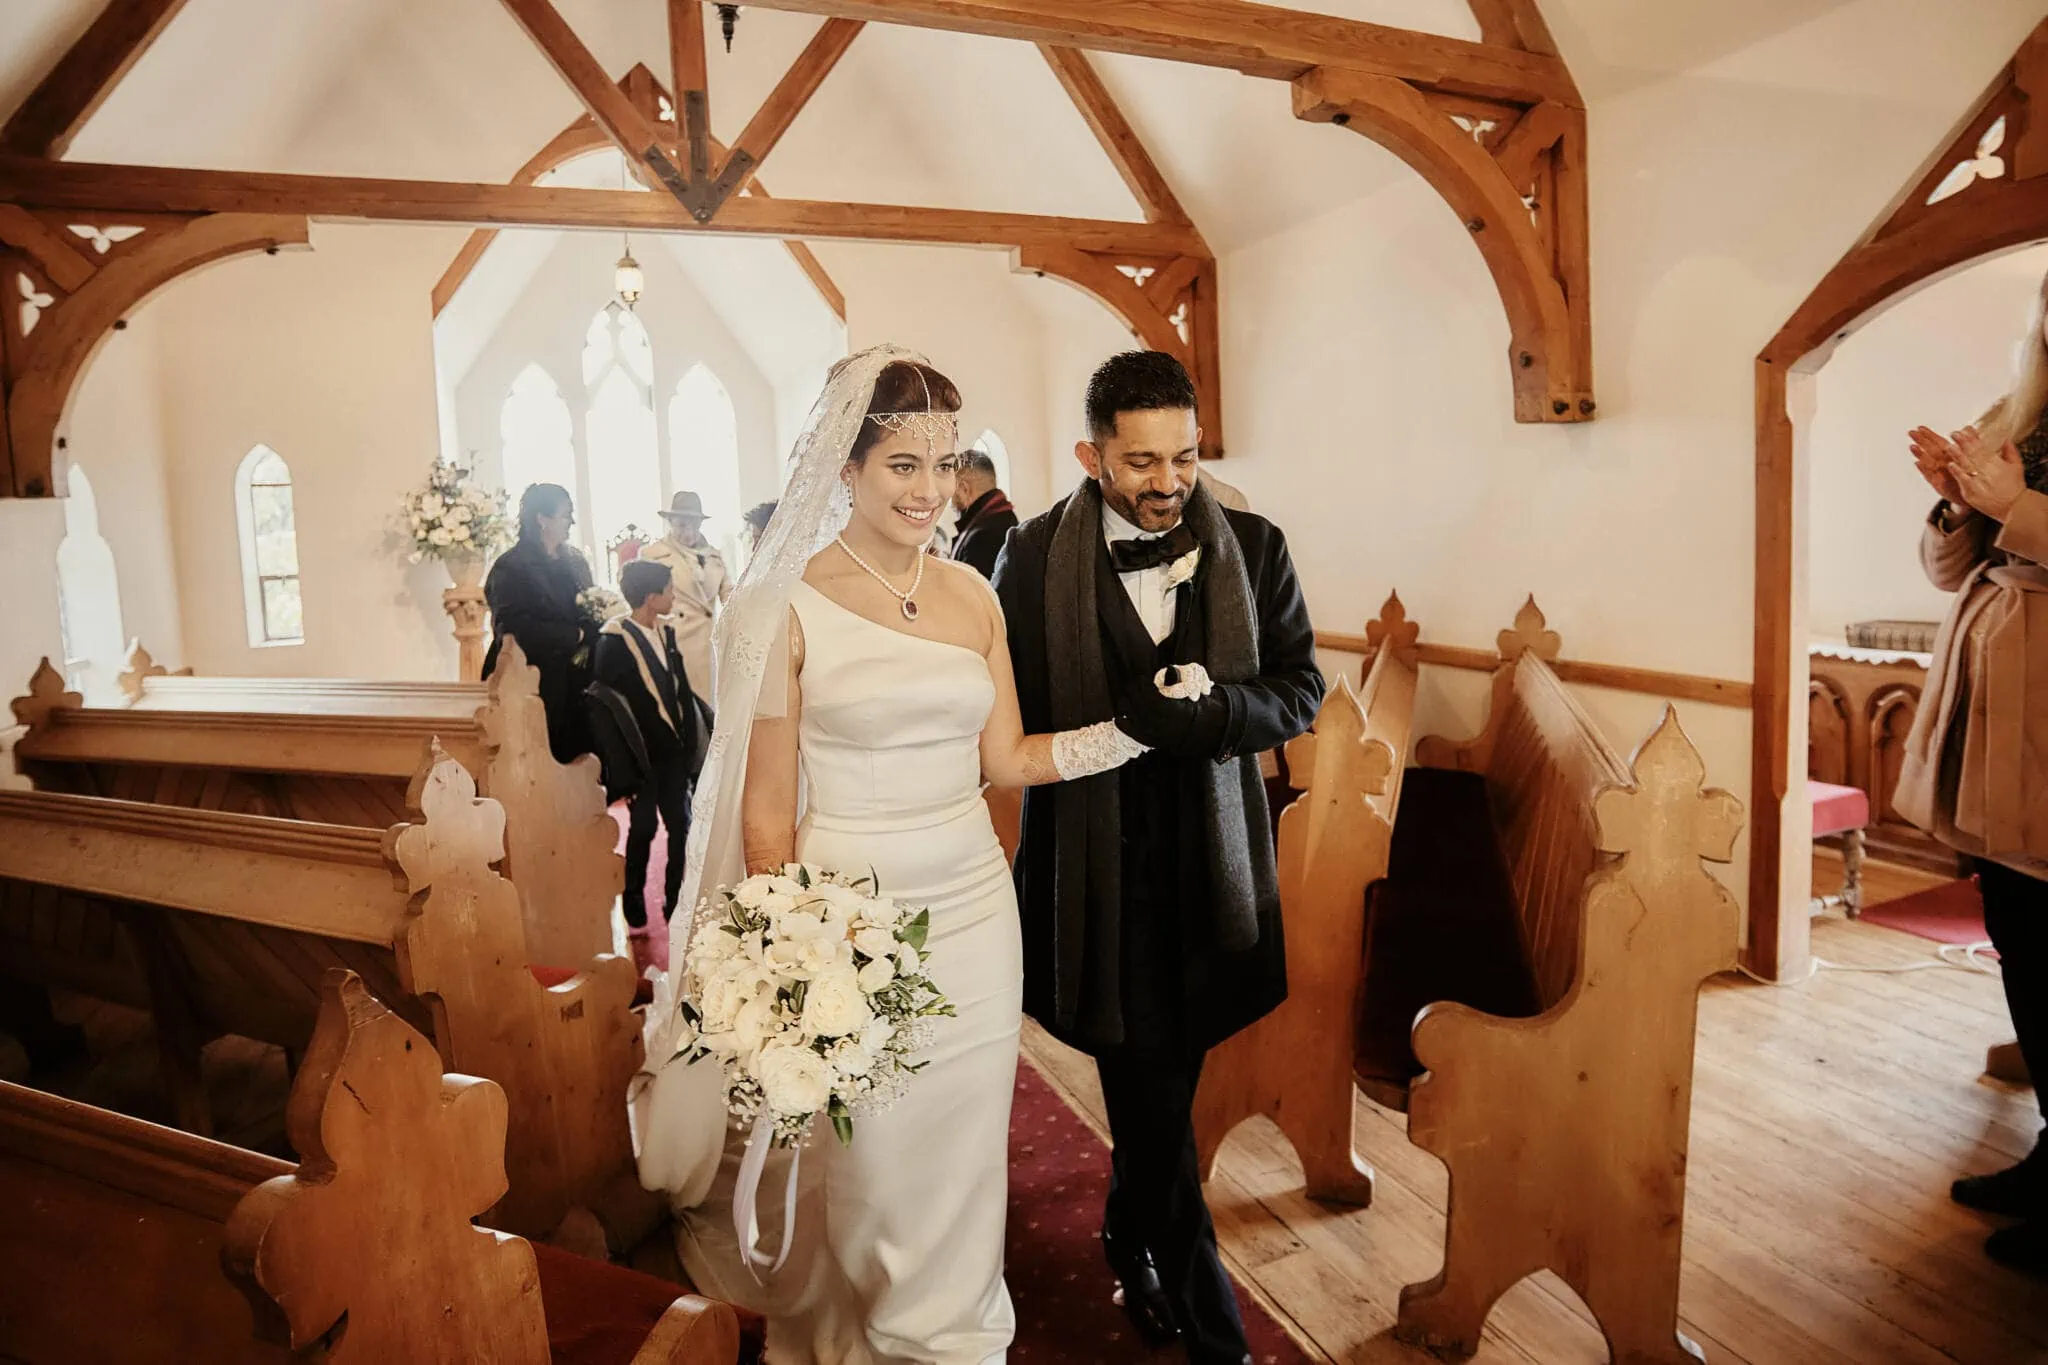 Queenstown New Zealand Elopement Wedding Photographer - Wasim and Yumn's Queenstown Islamic wedding, walking down the aisle of a church.